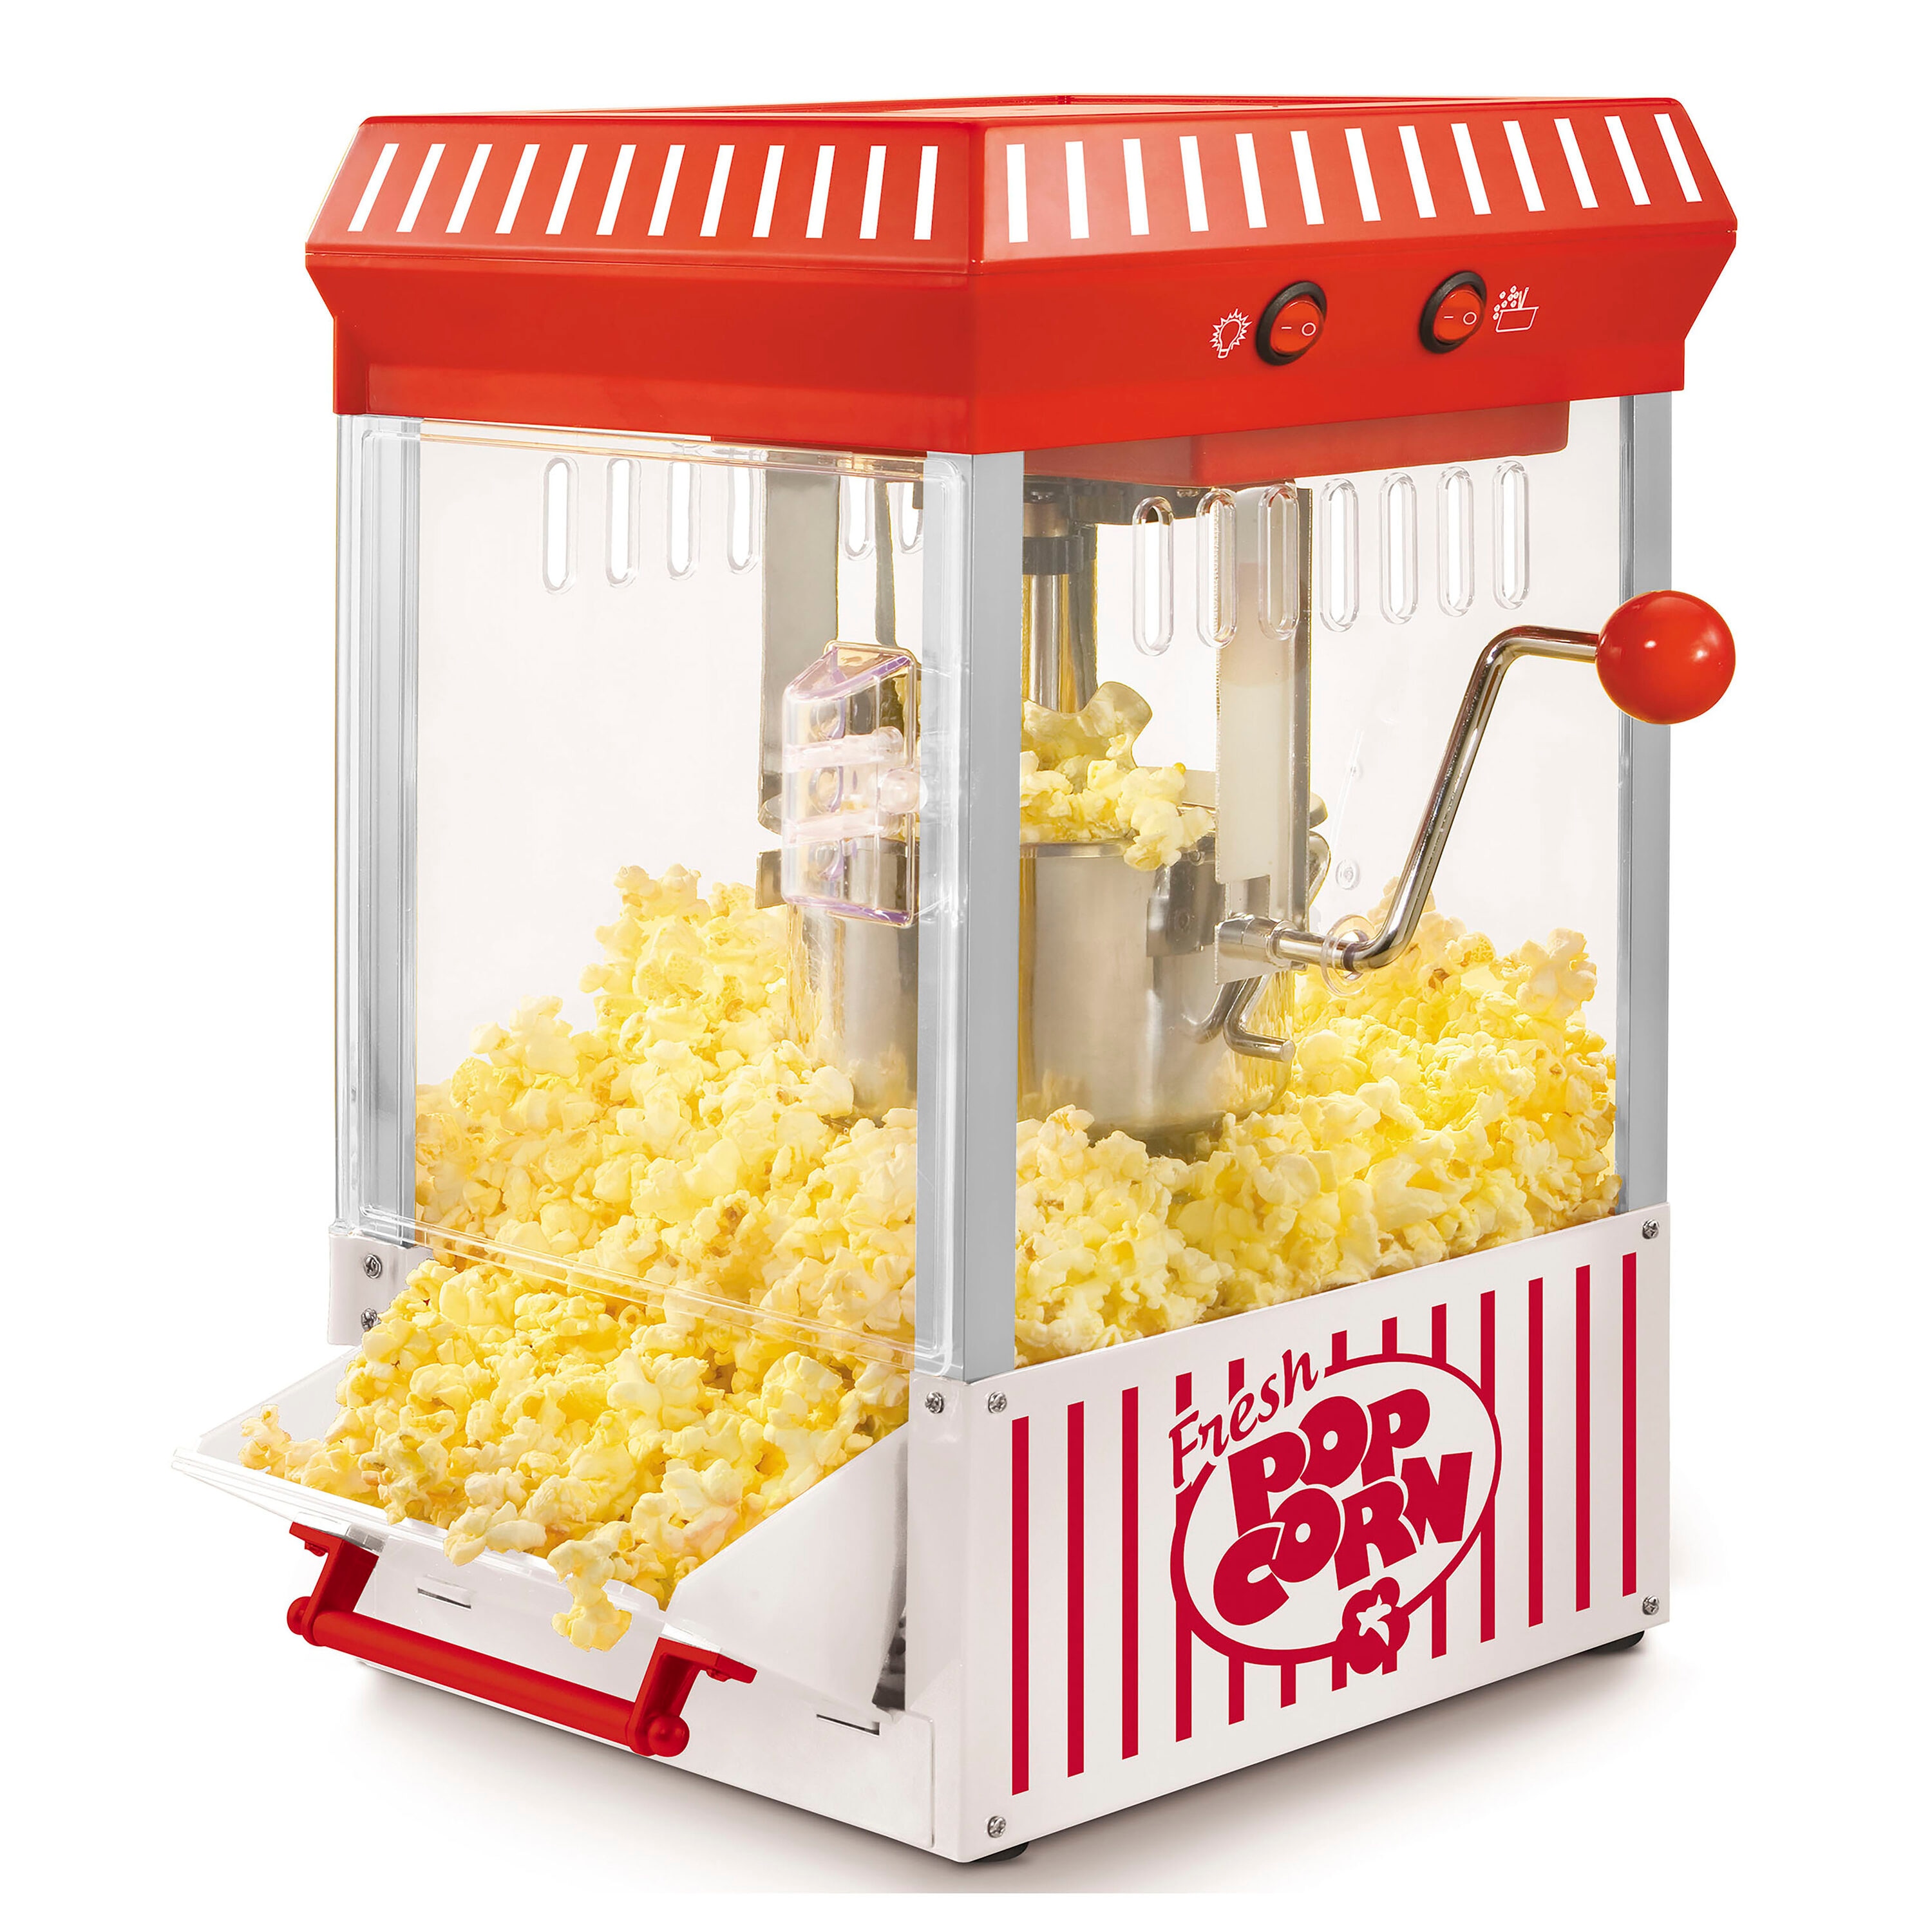 Nostalgia Air-Pop Popcorn Maker 